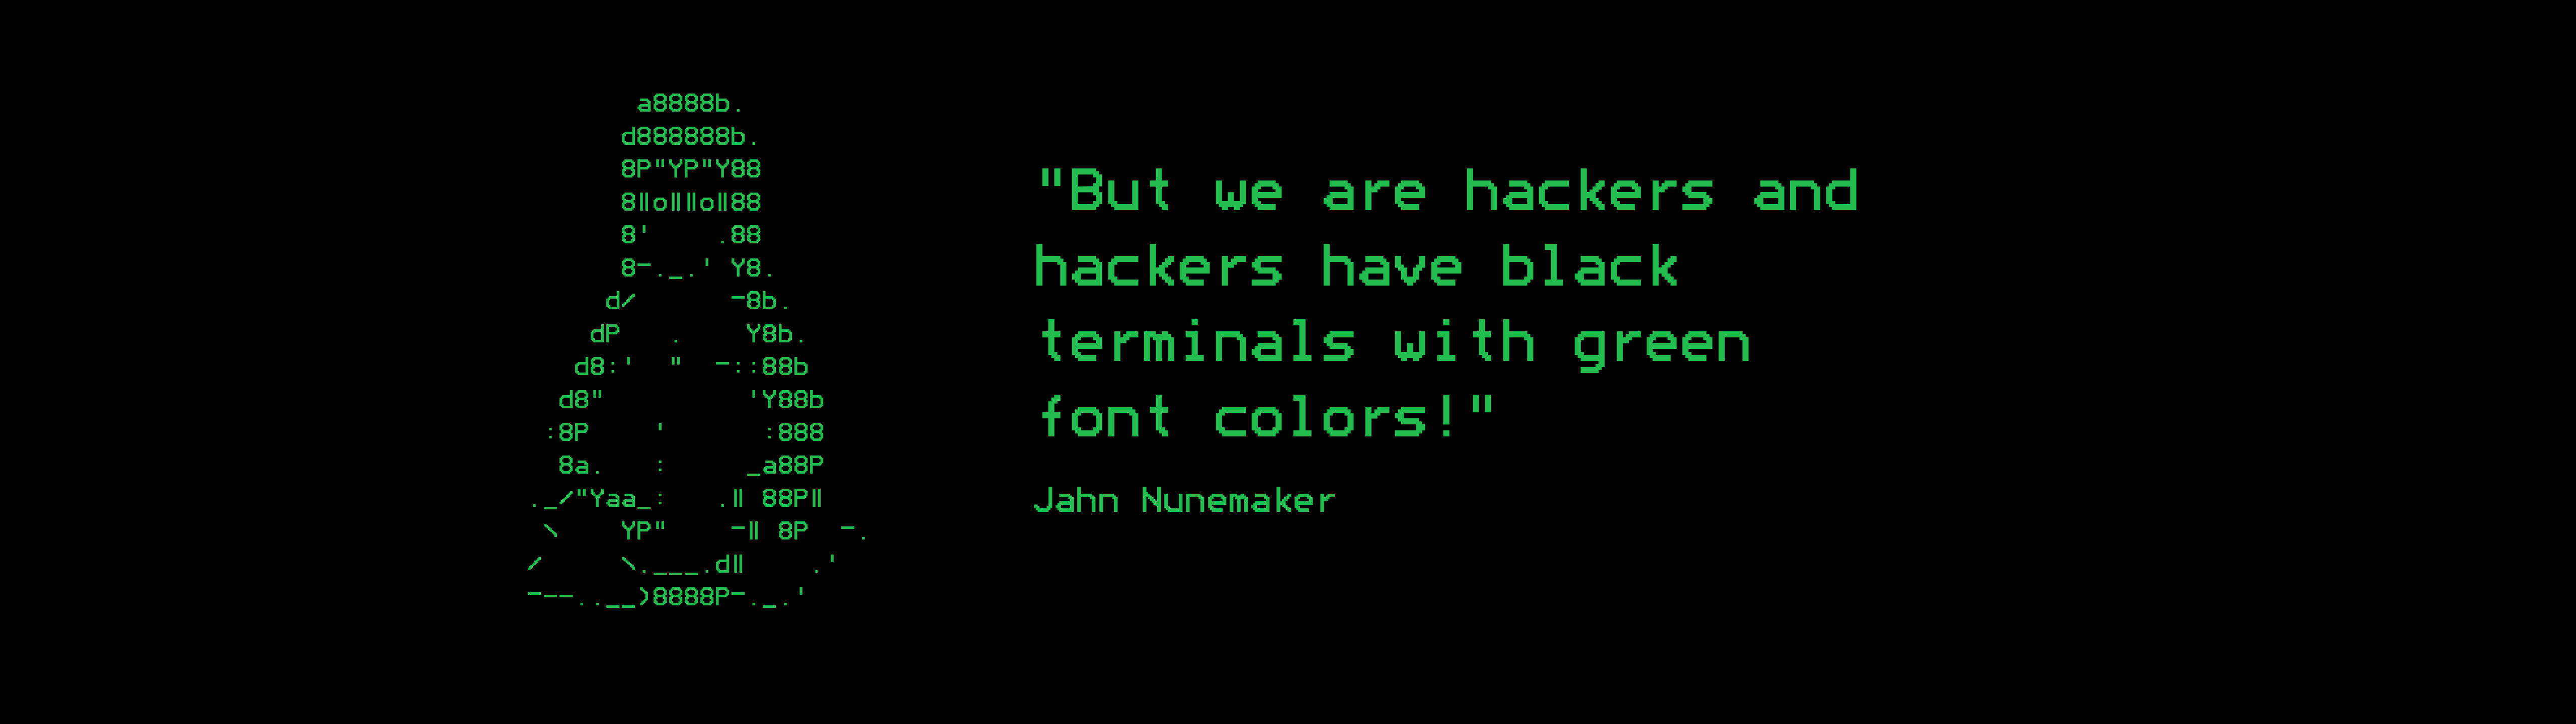 General 5120x1440 Tux green black quote digital art simple background text dual monitors ASCII art multiple display humor